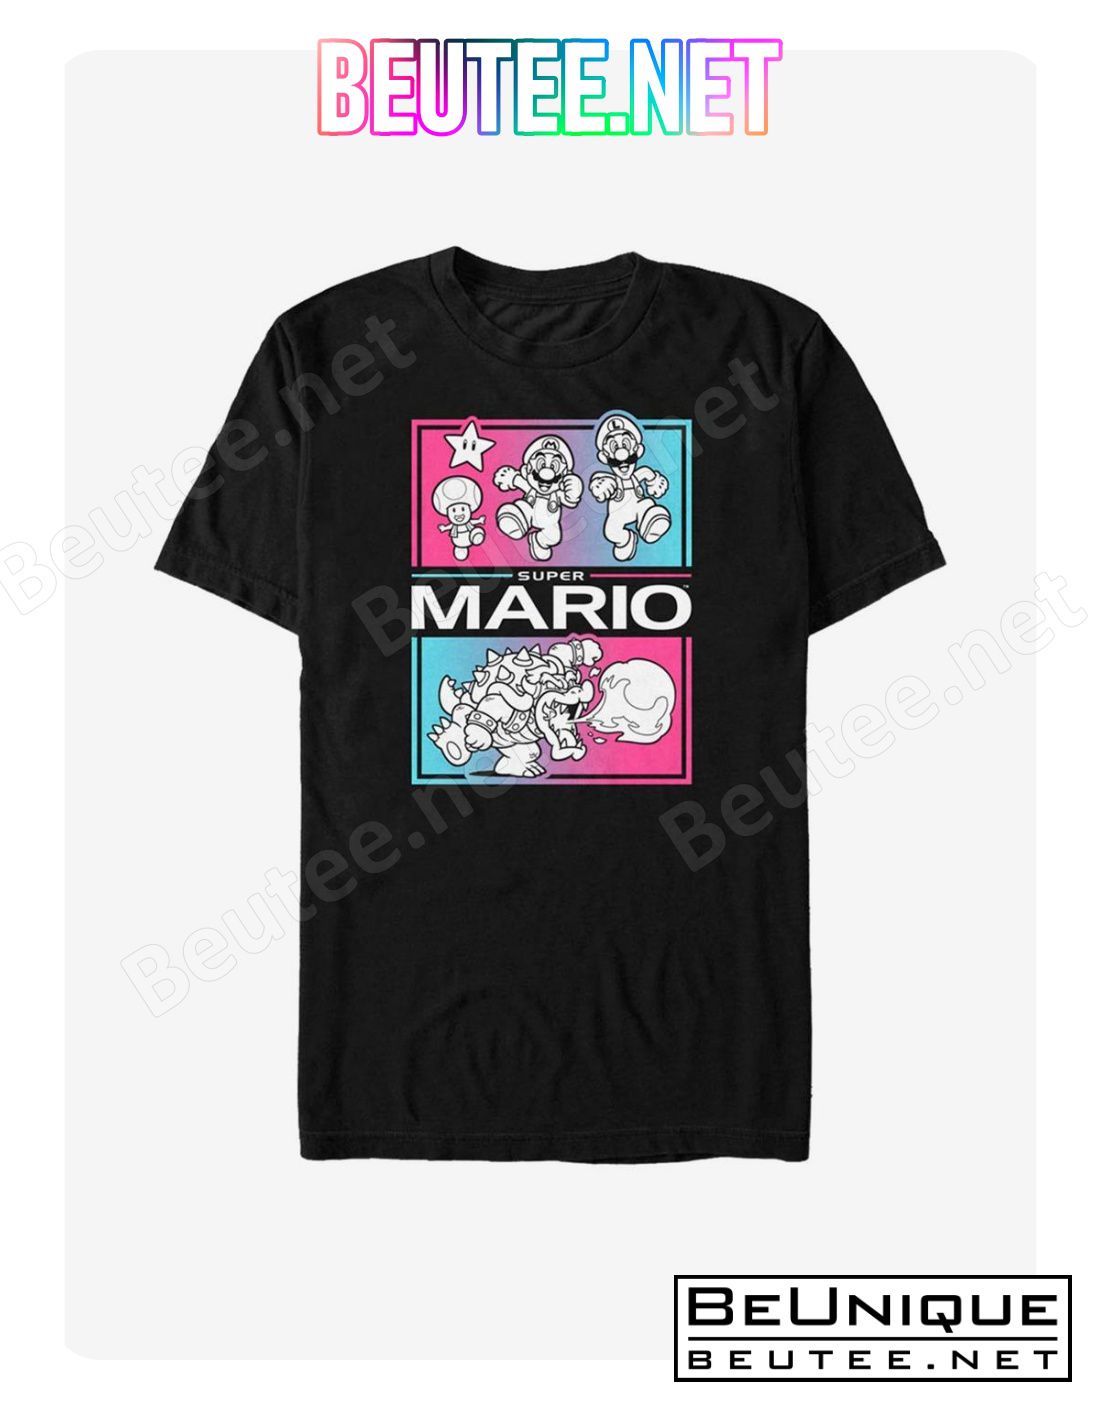 Super Mario Runners Up T-Shirt